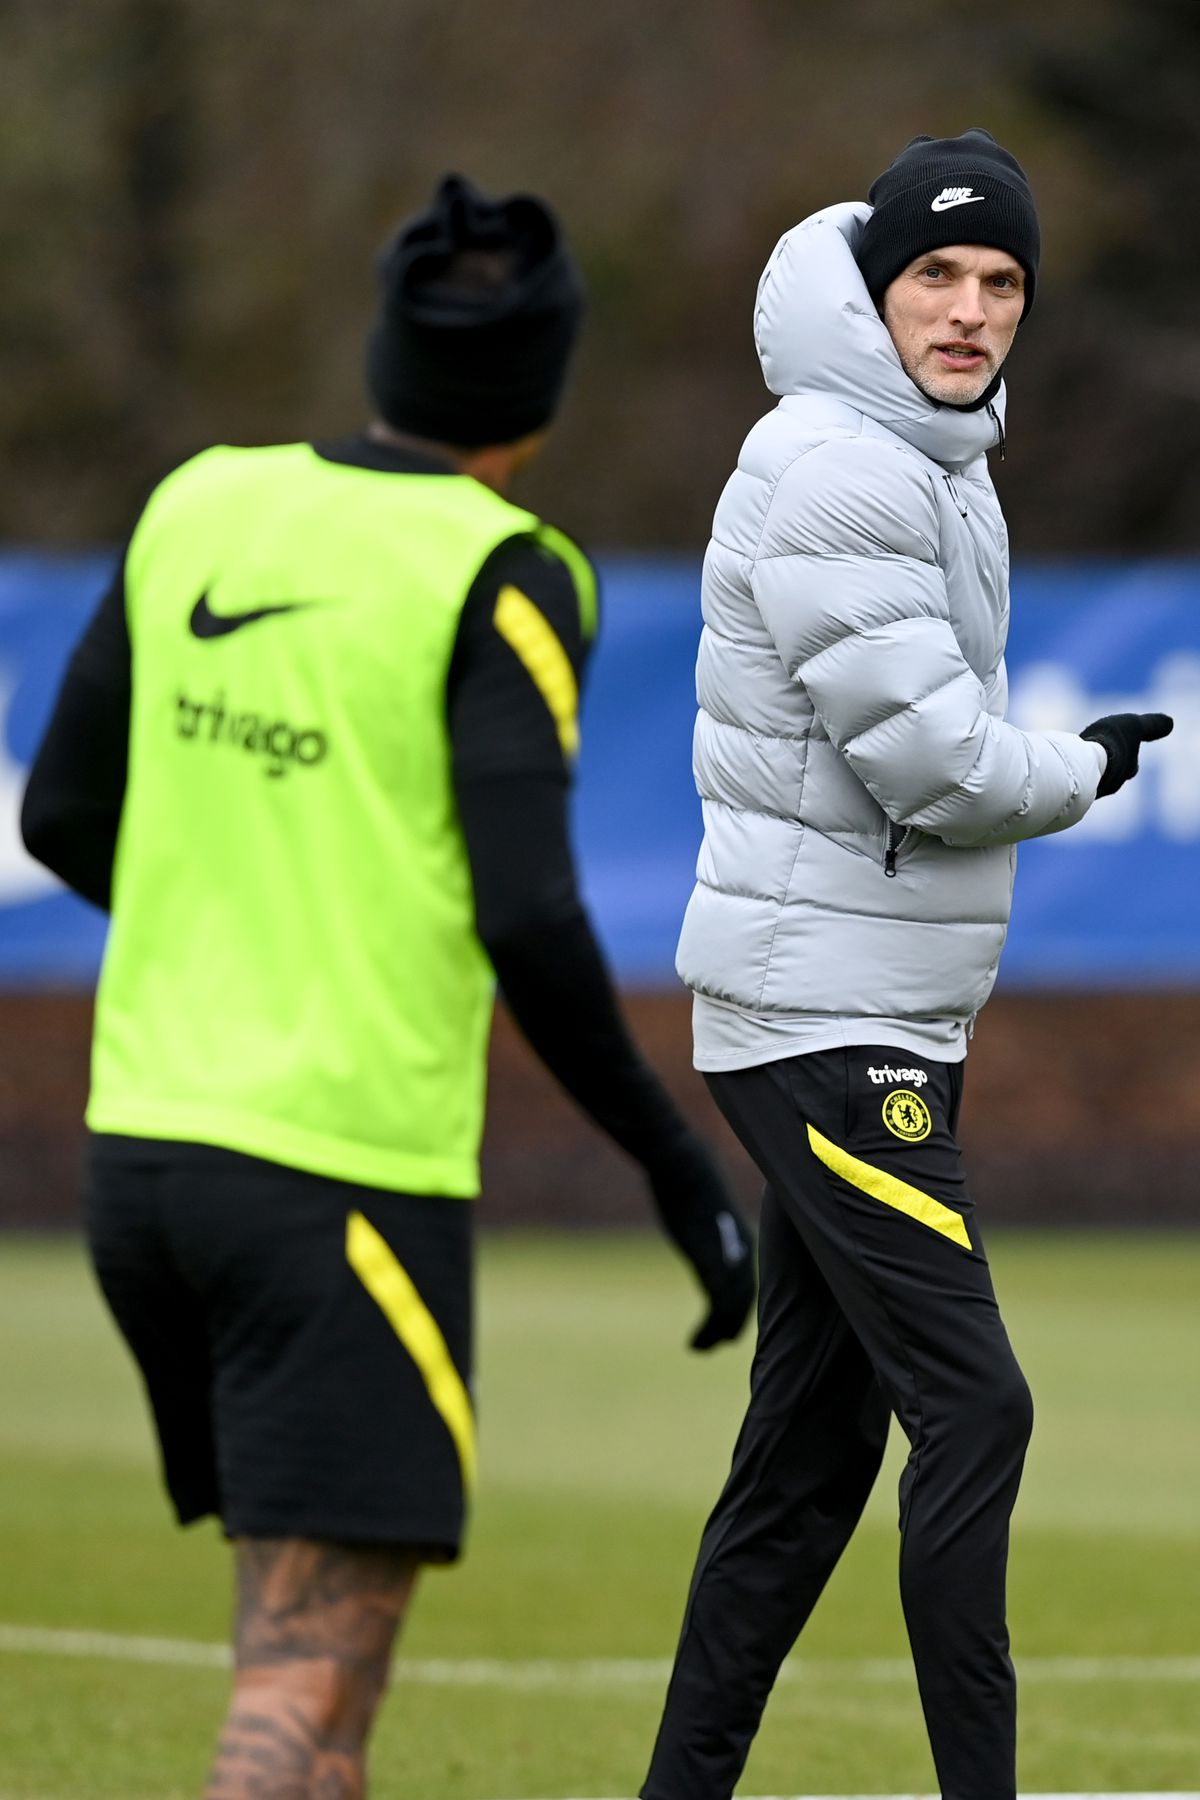 Chelsea FC Training Session